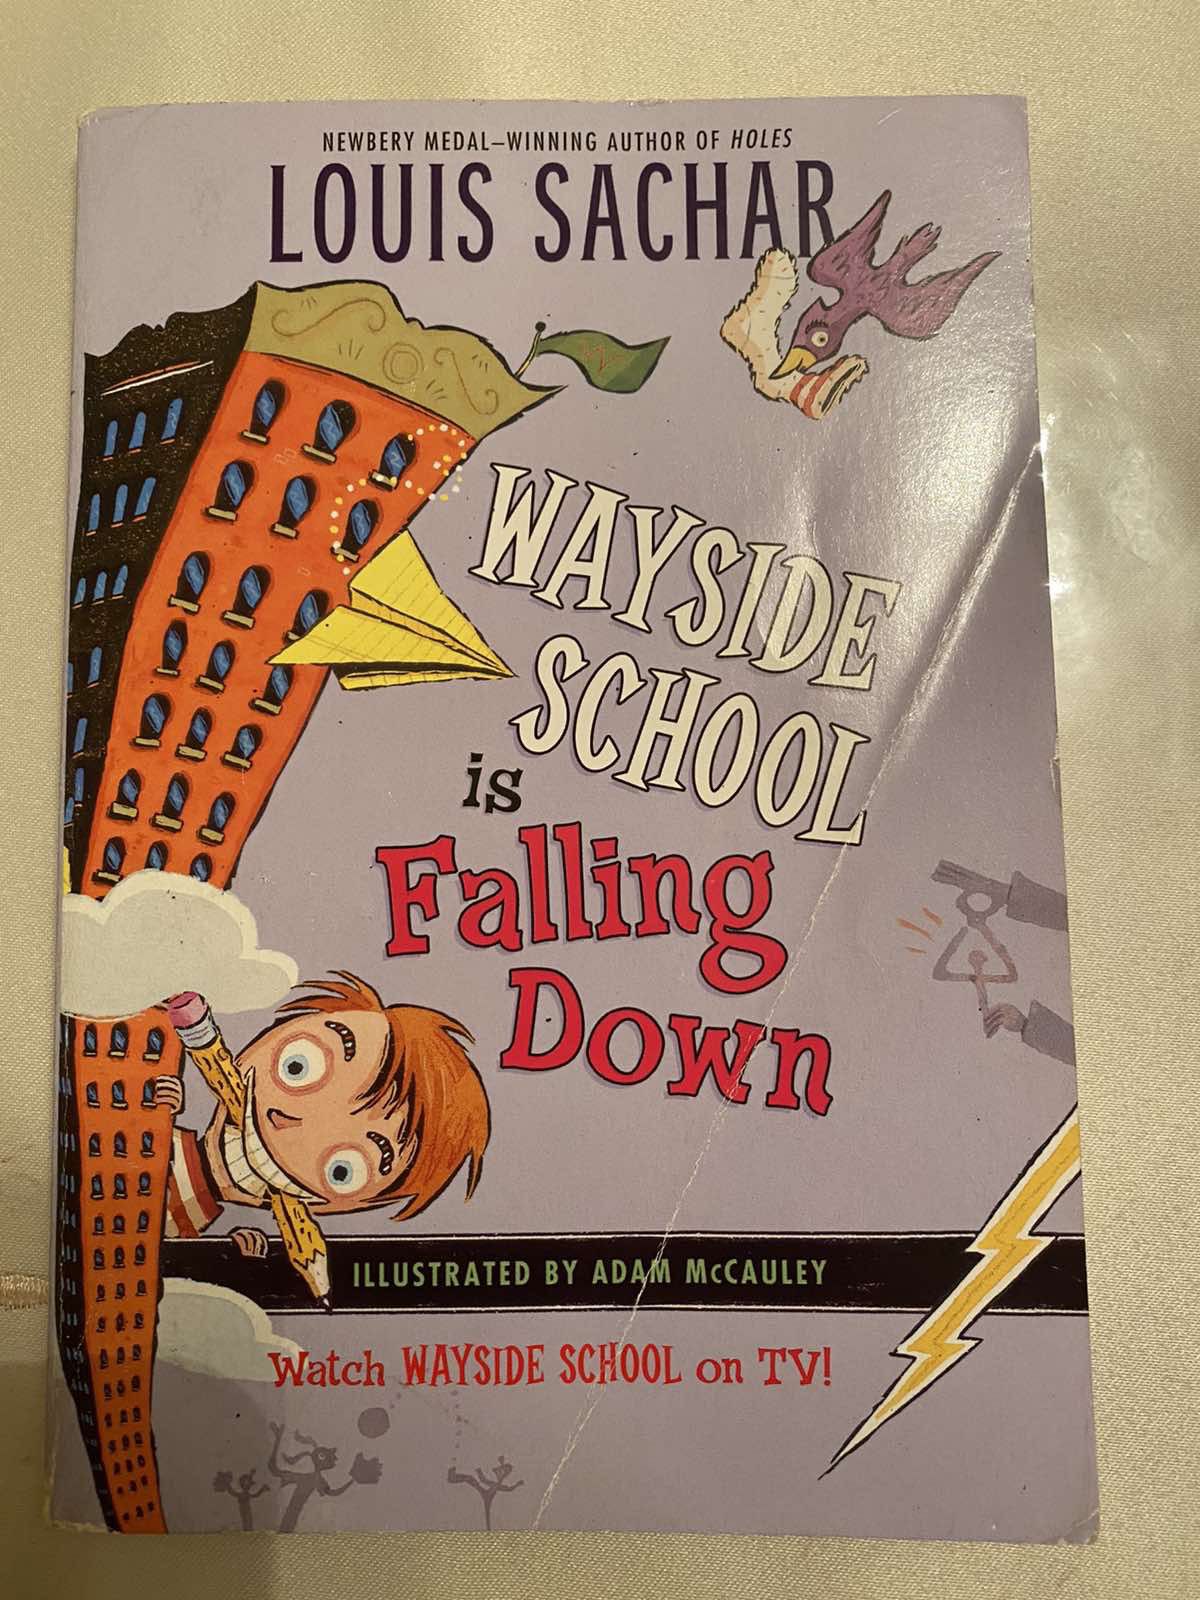 Wayside School Is Falling Down by Louis Sachar